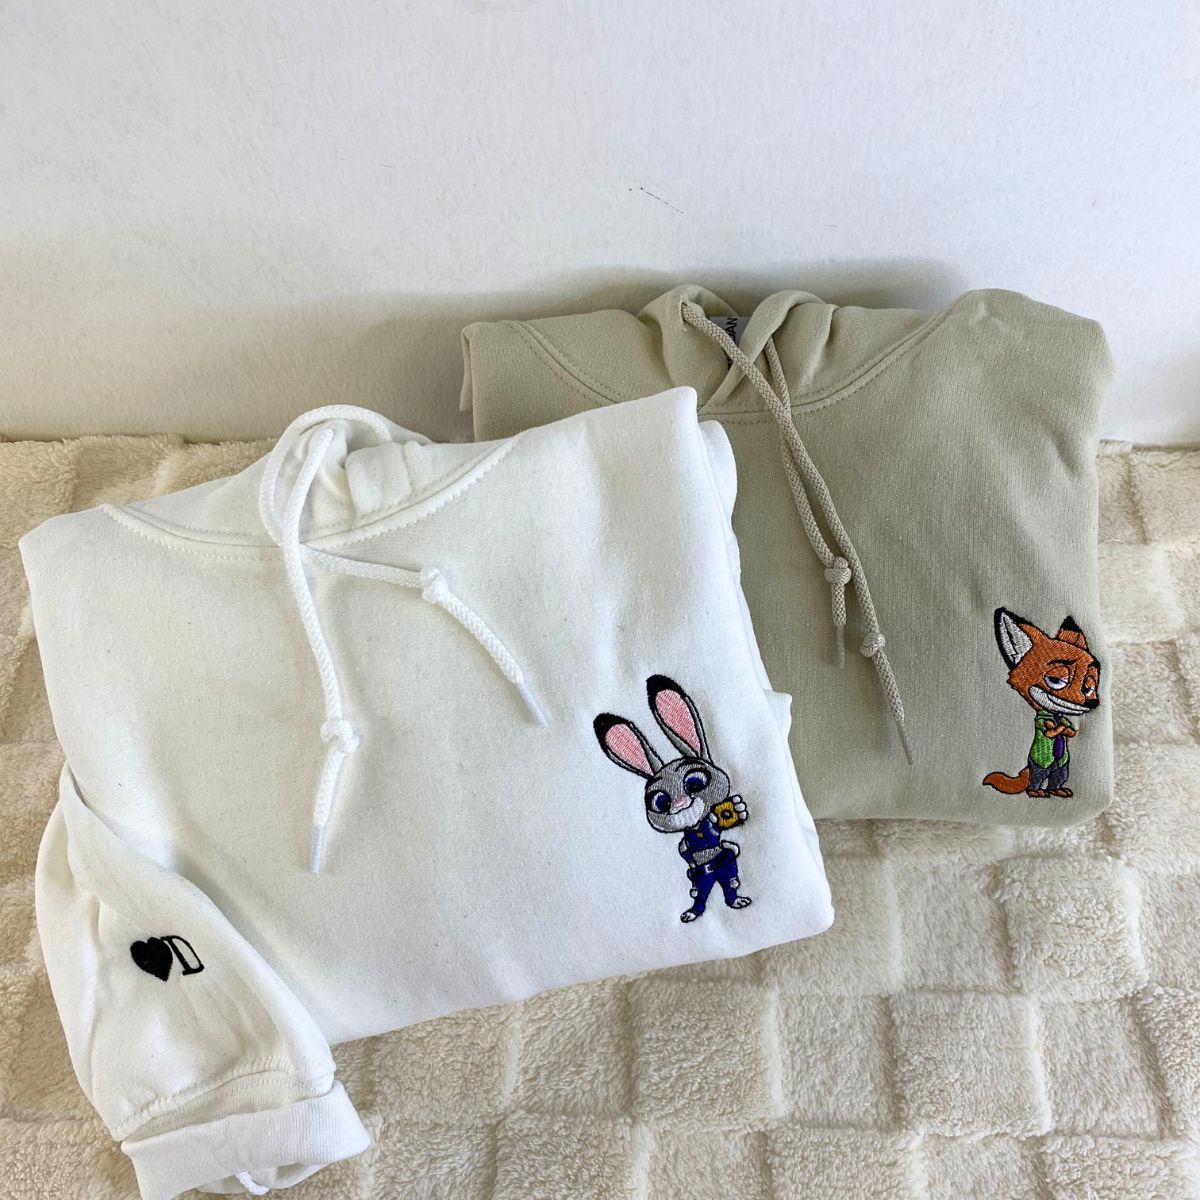 Custom Embroidered Sweatshirts For Couples, Custom Matching Couple Sweatshirt, Cute Cartoon Rabbits Couples Embroidered Crewneck Sweater